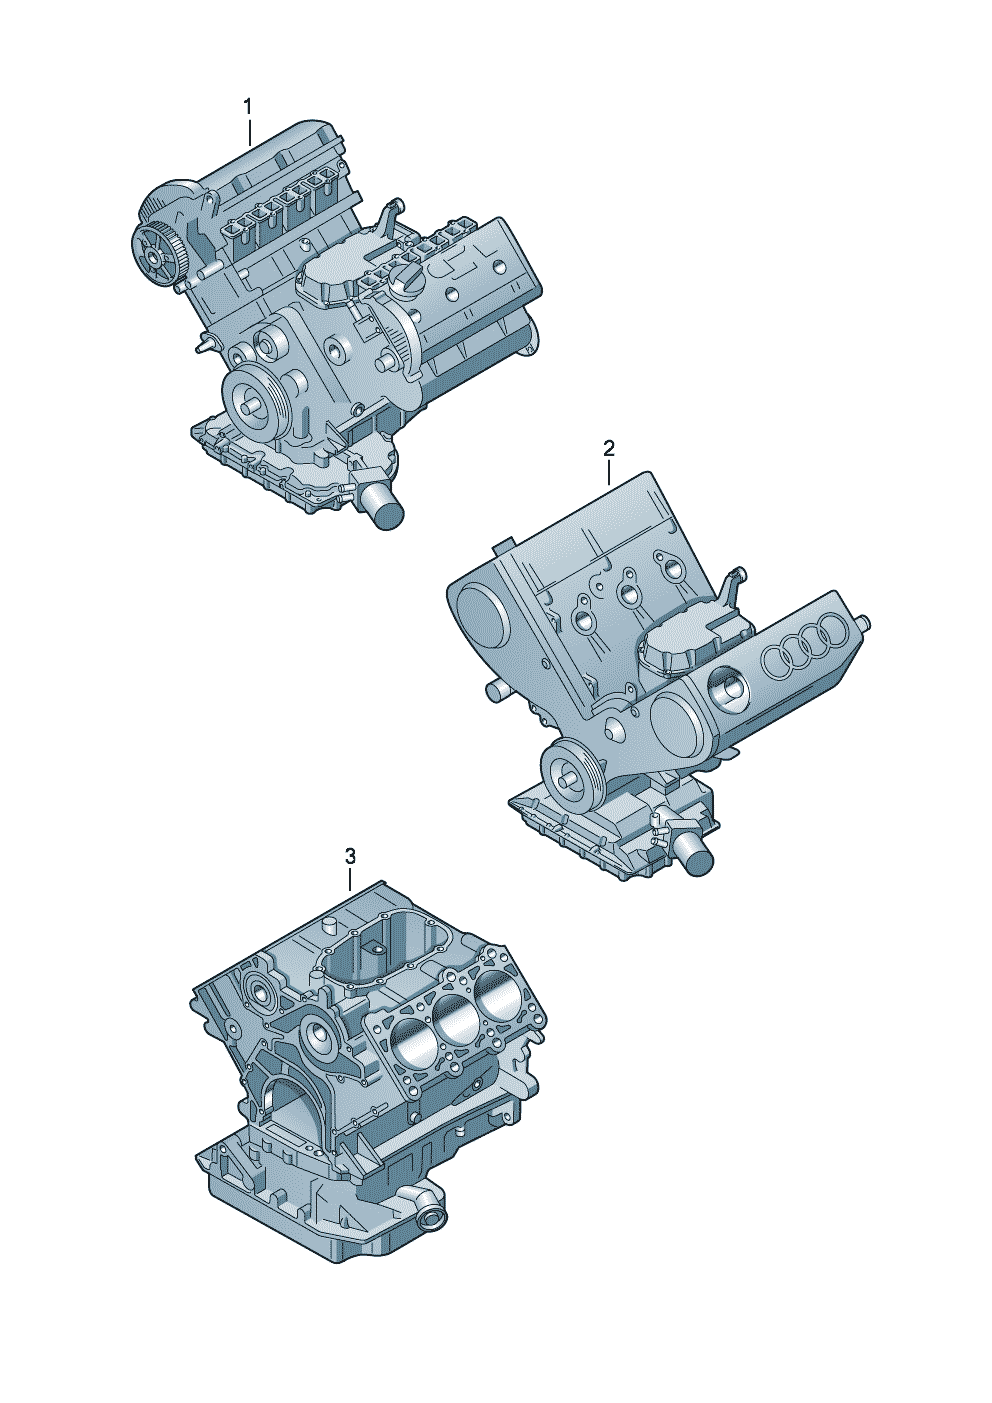 Base engine 3.0Ltr. - Audi A6/S6/Avant quattro - a6q